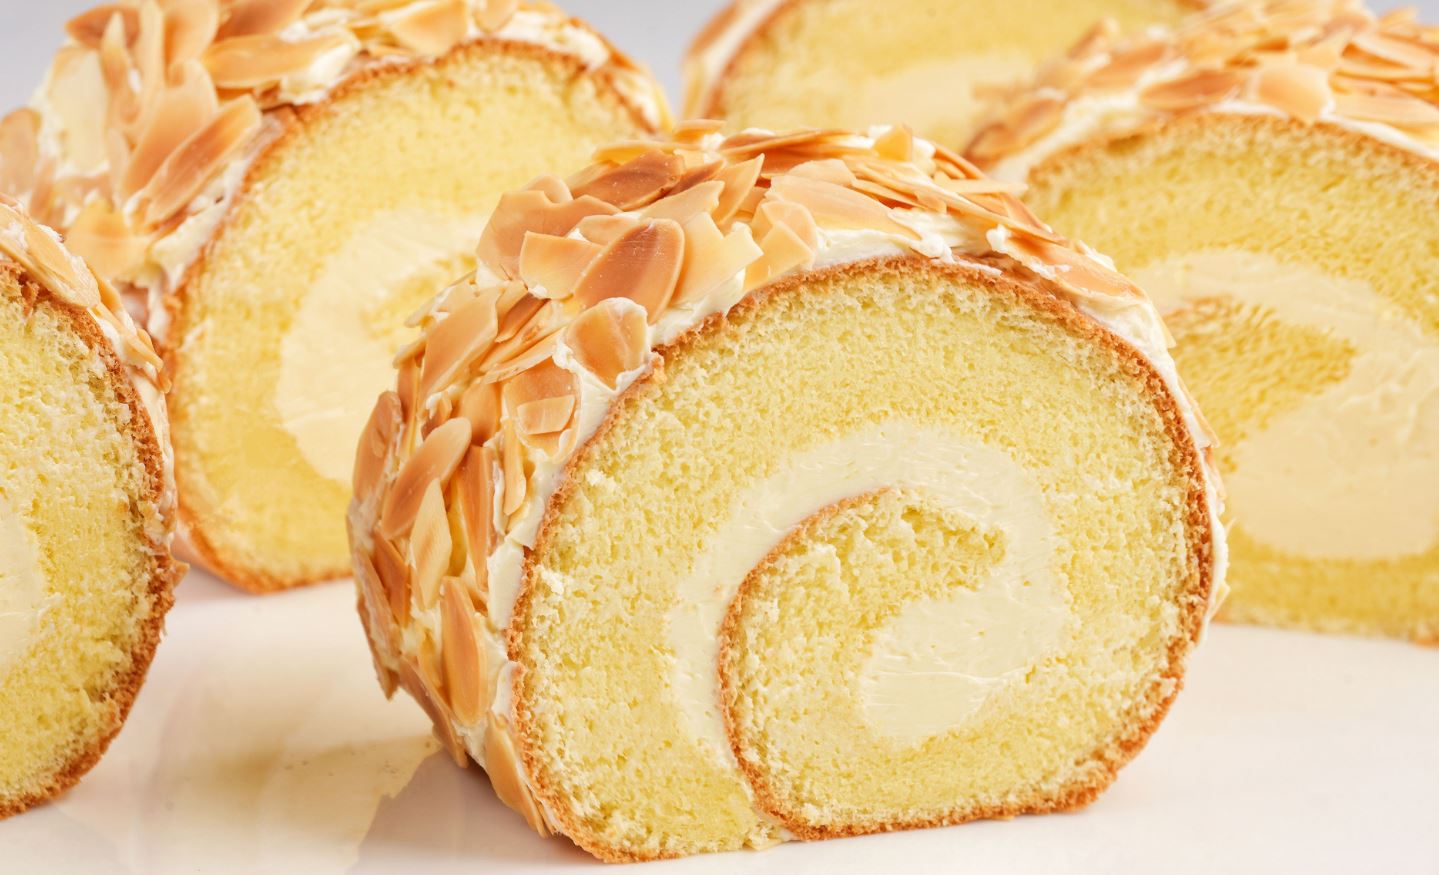 Almond Cake Roll